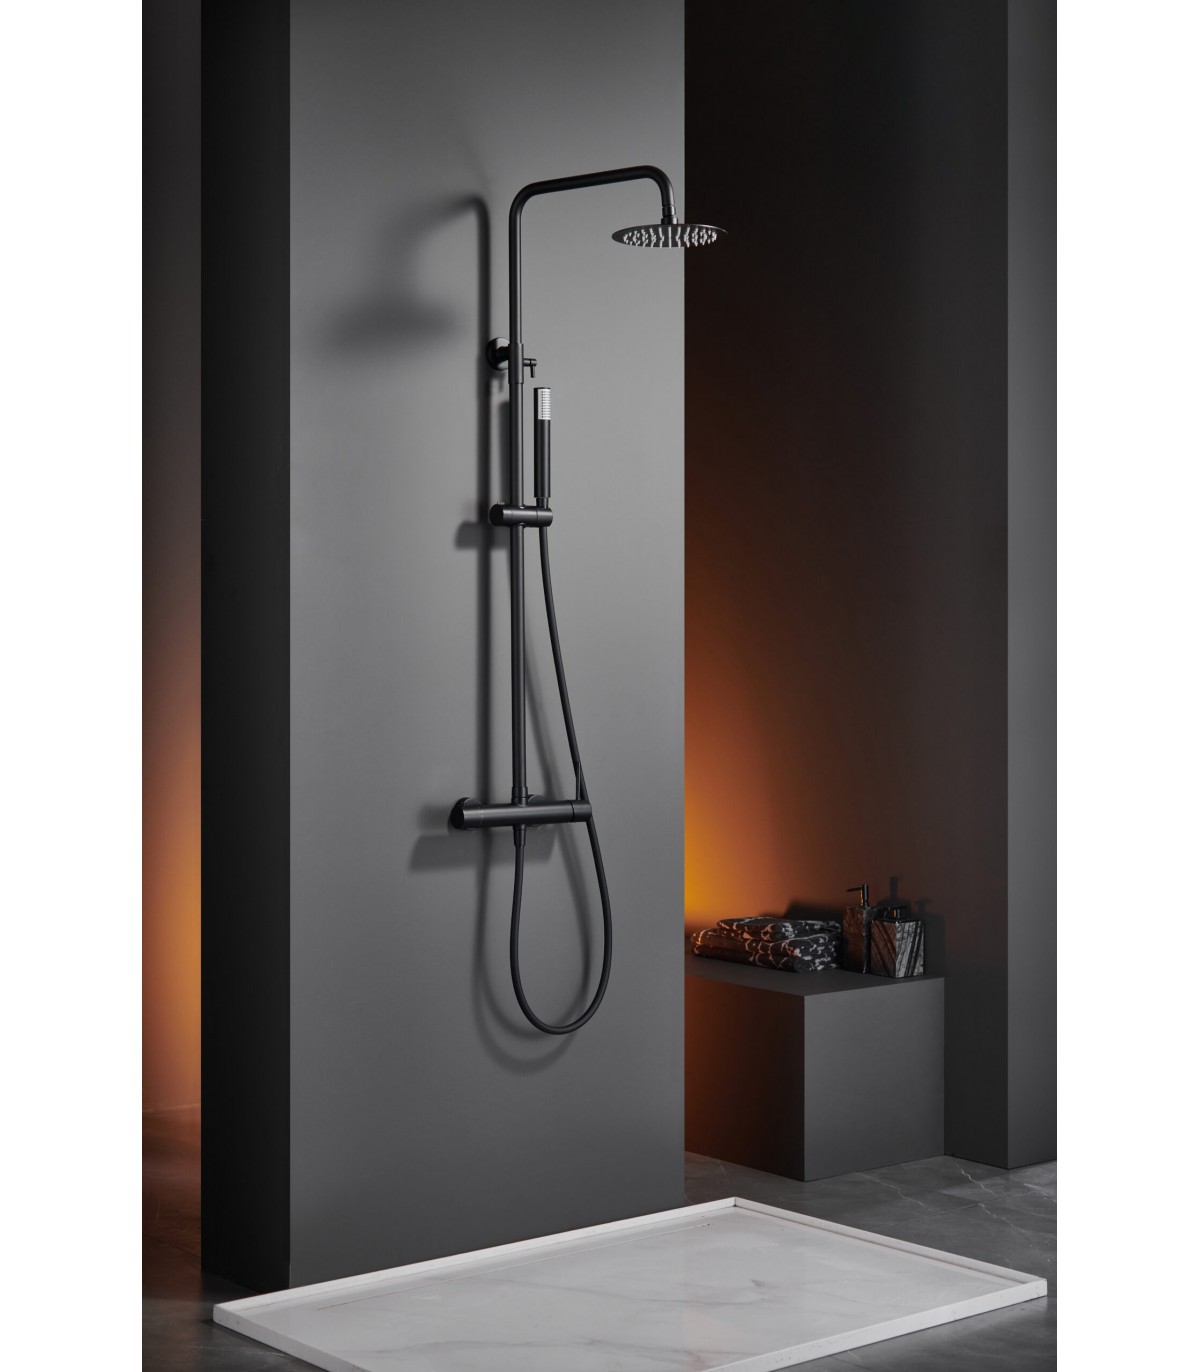 Barra de ducha termostática negro mate serie Monza - Imex Products